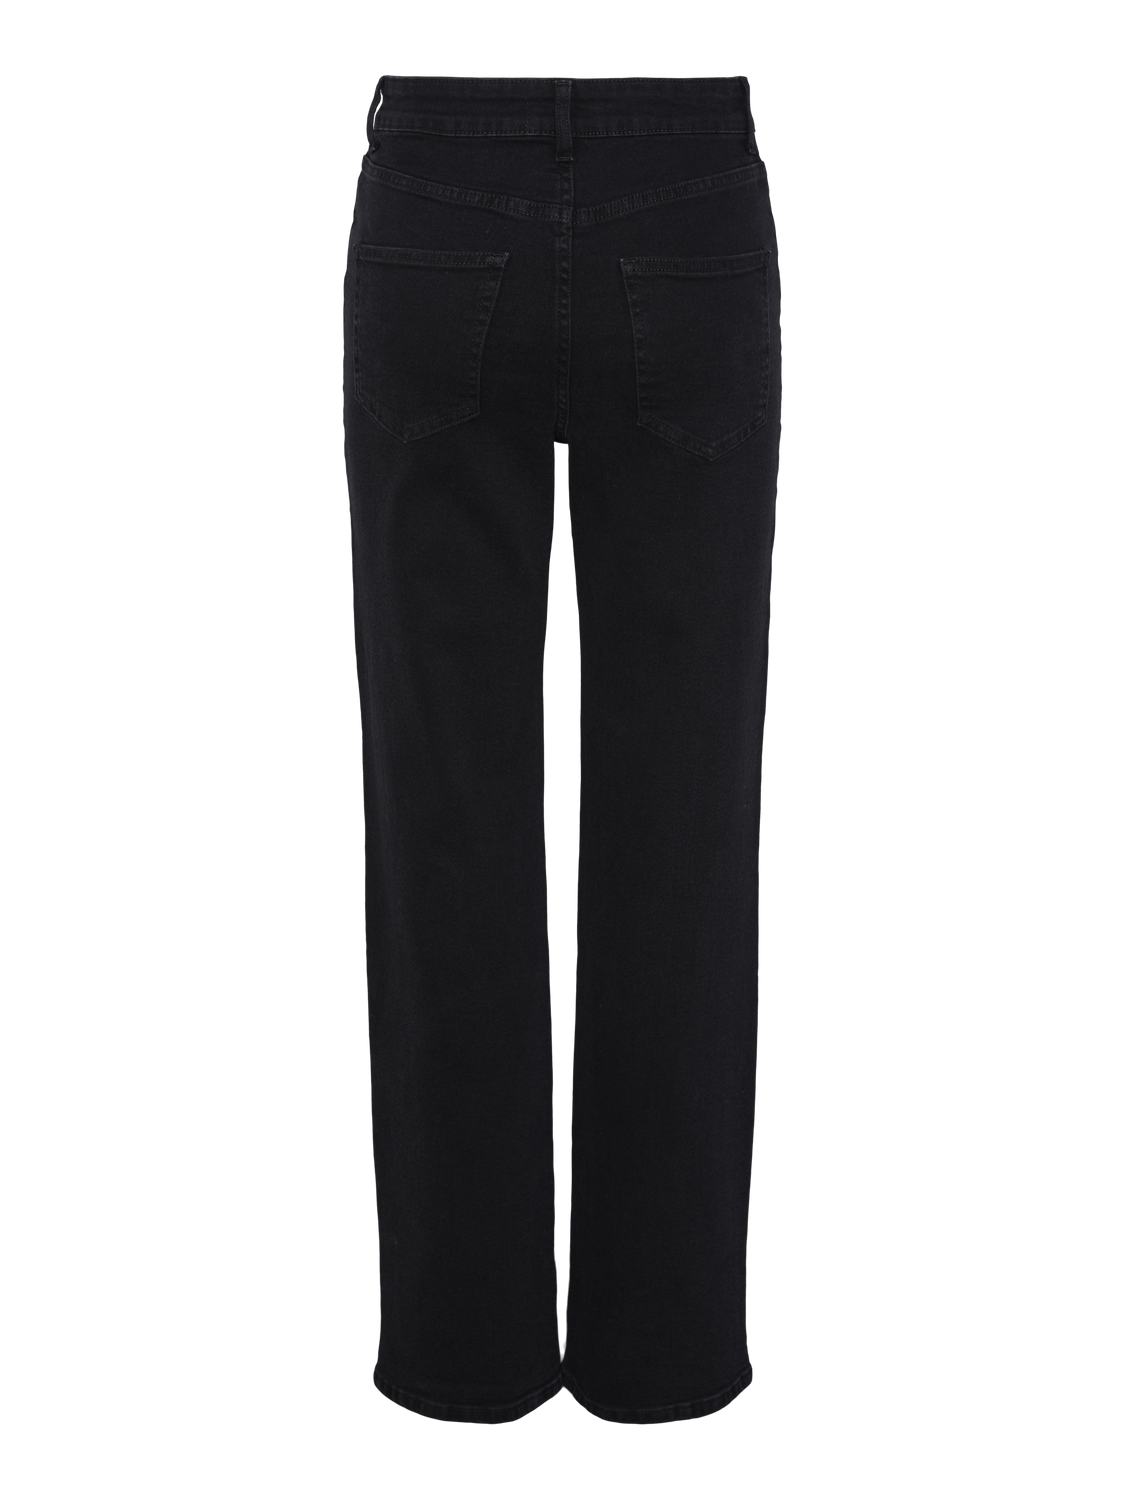 PCSIFFI Jeans - Black